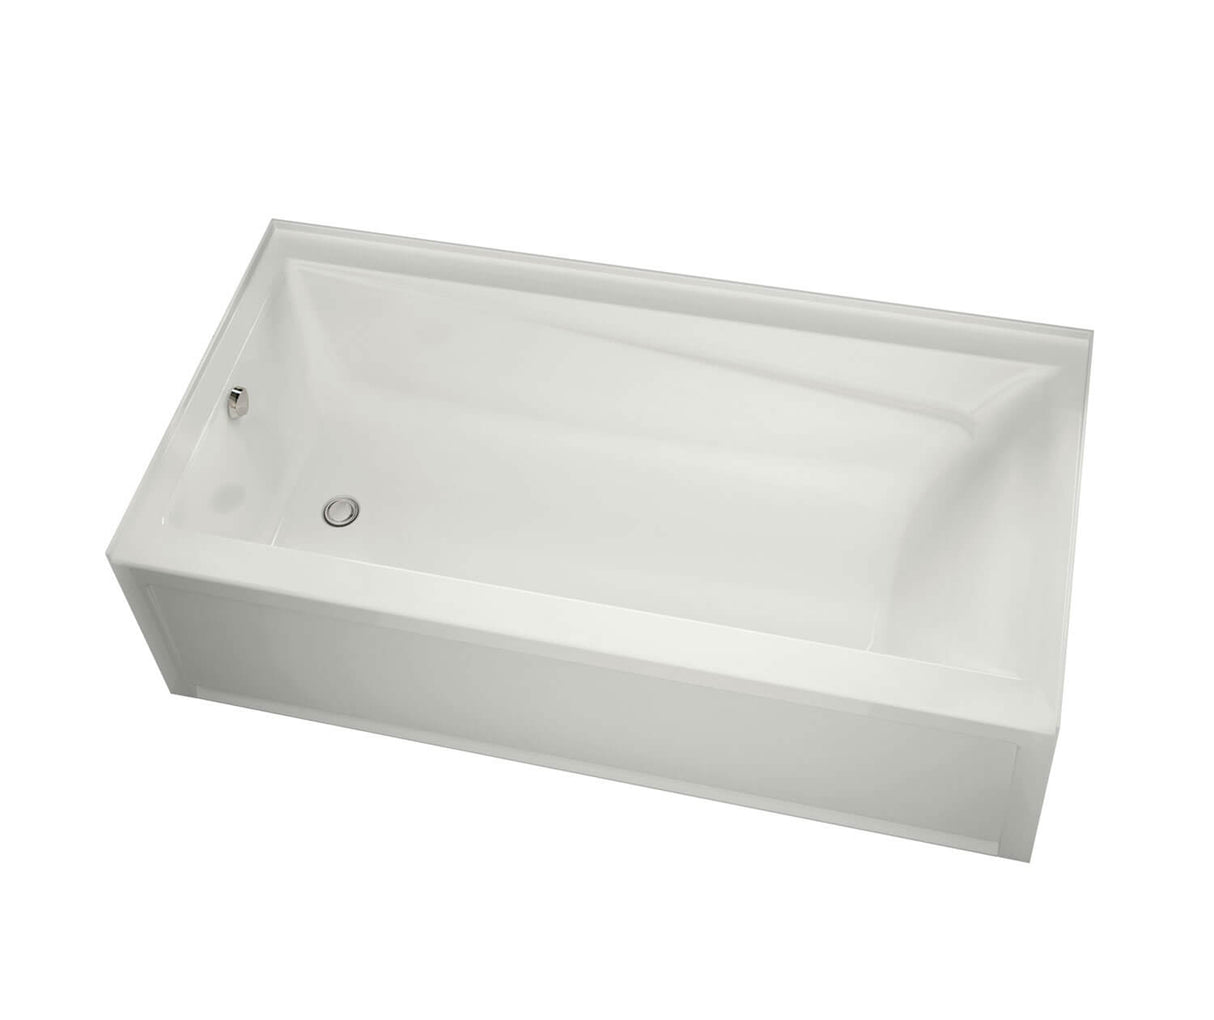 MAAX 106176-R-103-001 Exhibit 6042 IFS AFR Acrylic Alcove Right-Hand Drain Aeroeffect Bathtub in White